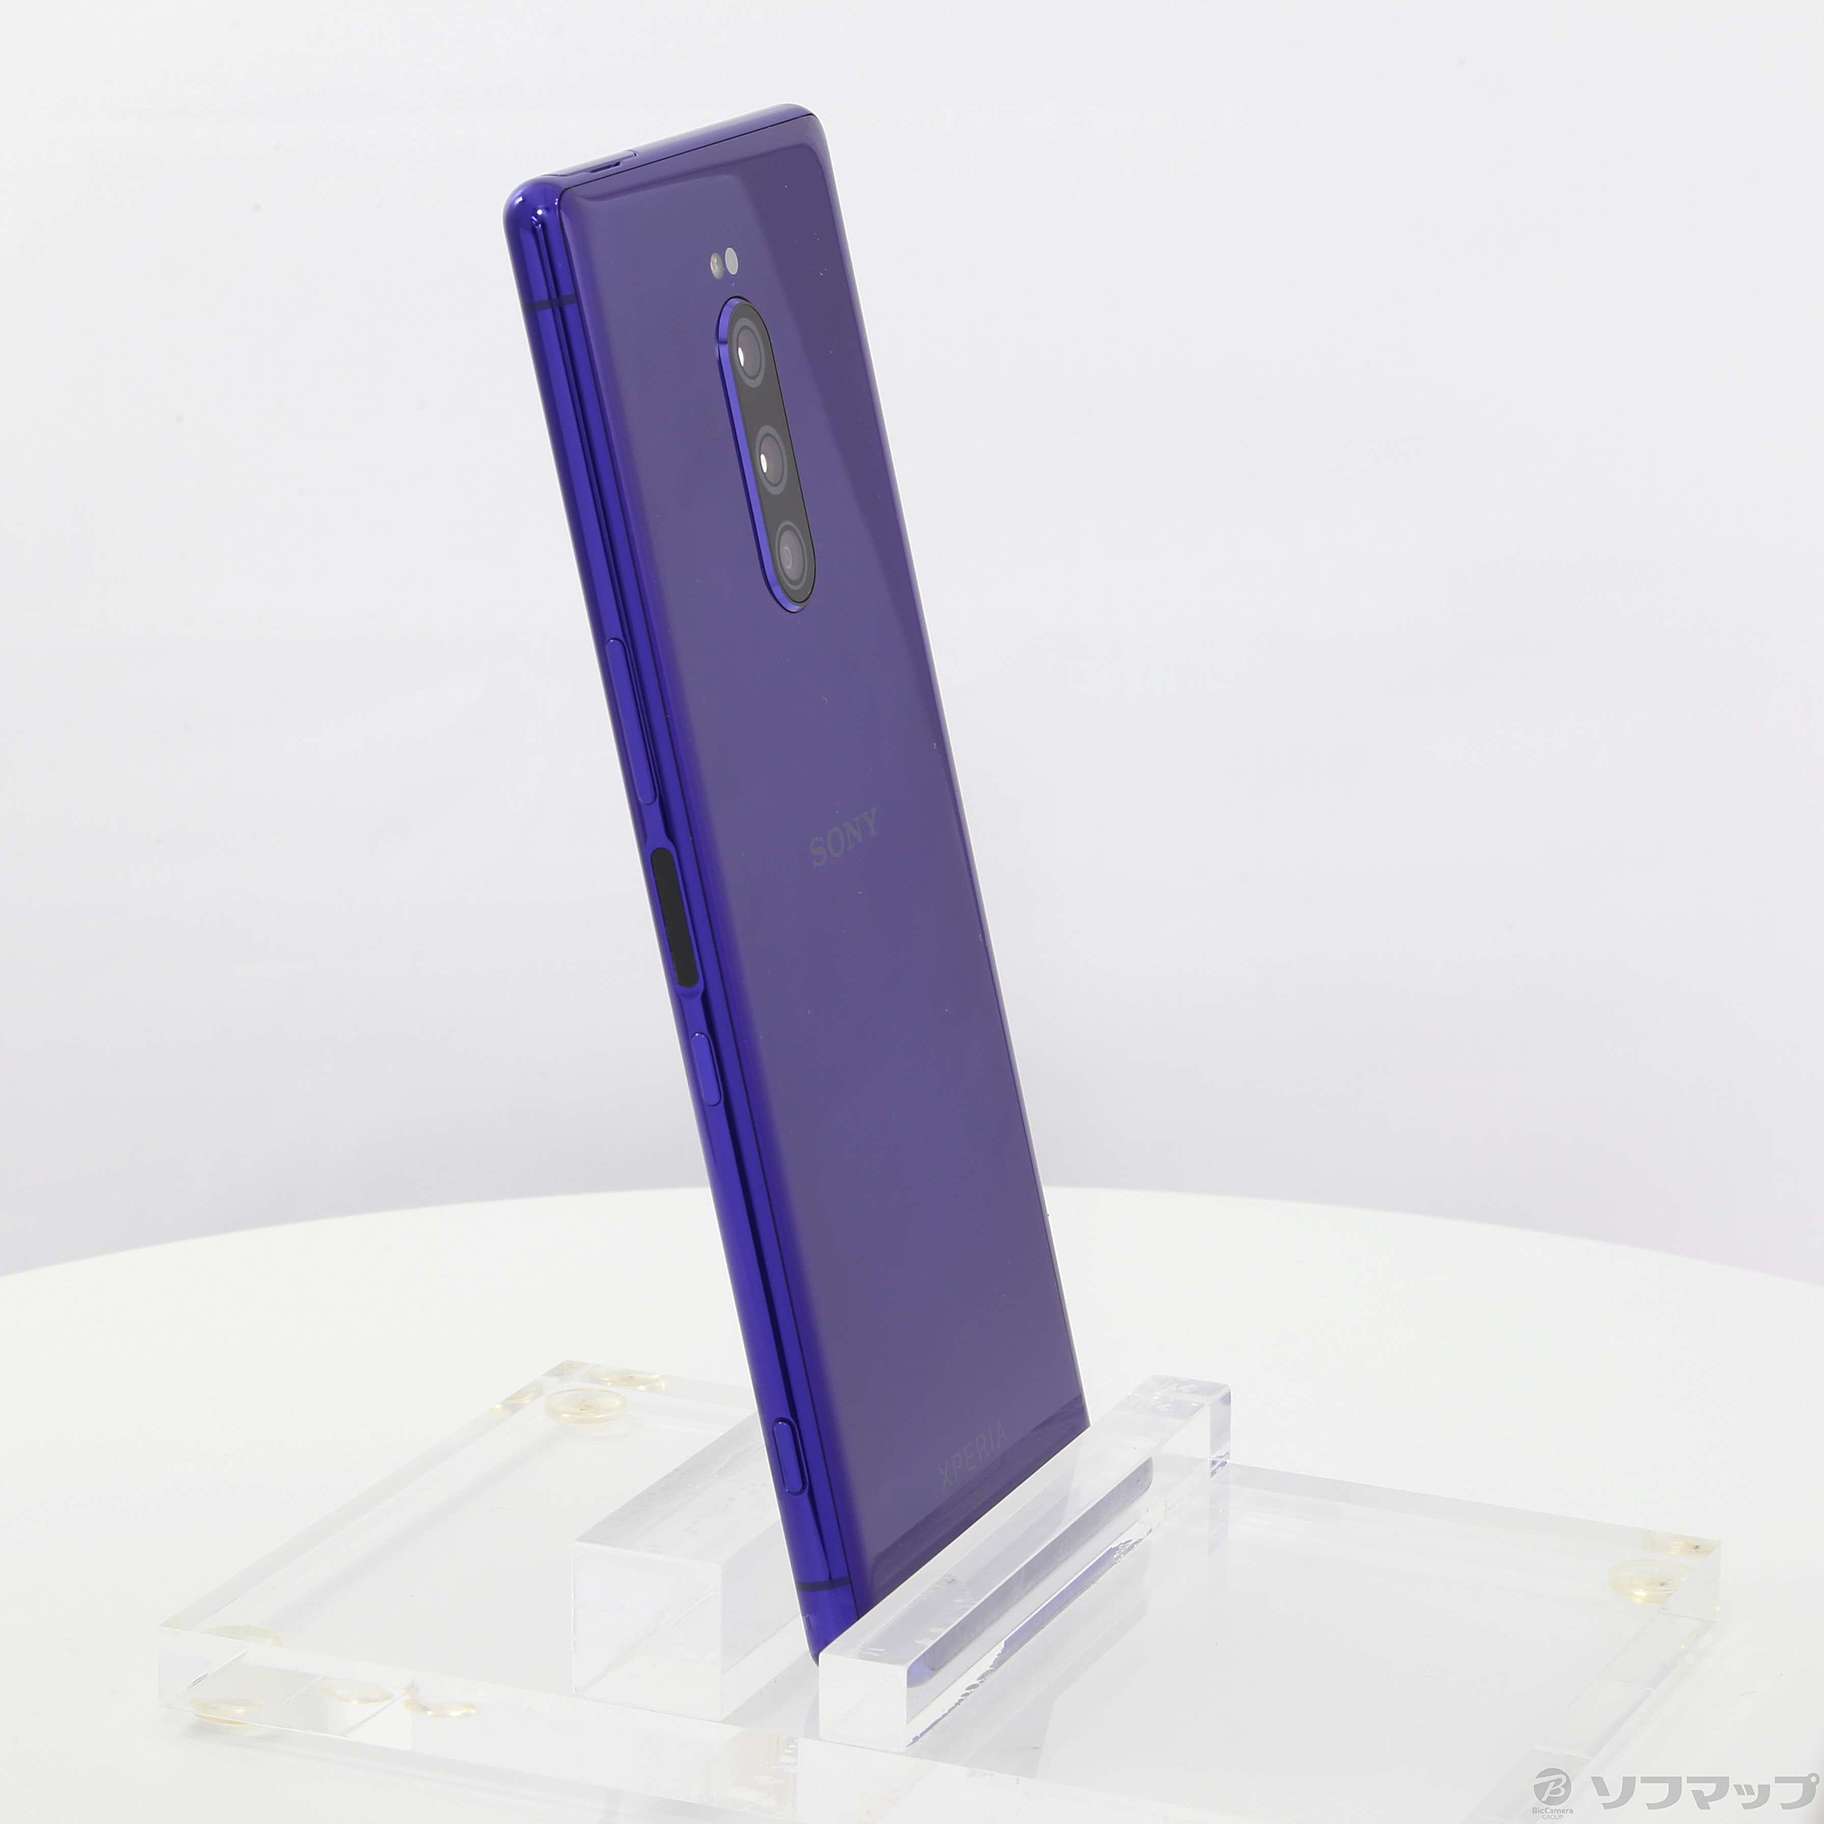 Xperia 1 Purple 64 GB au